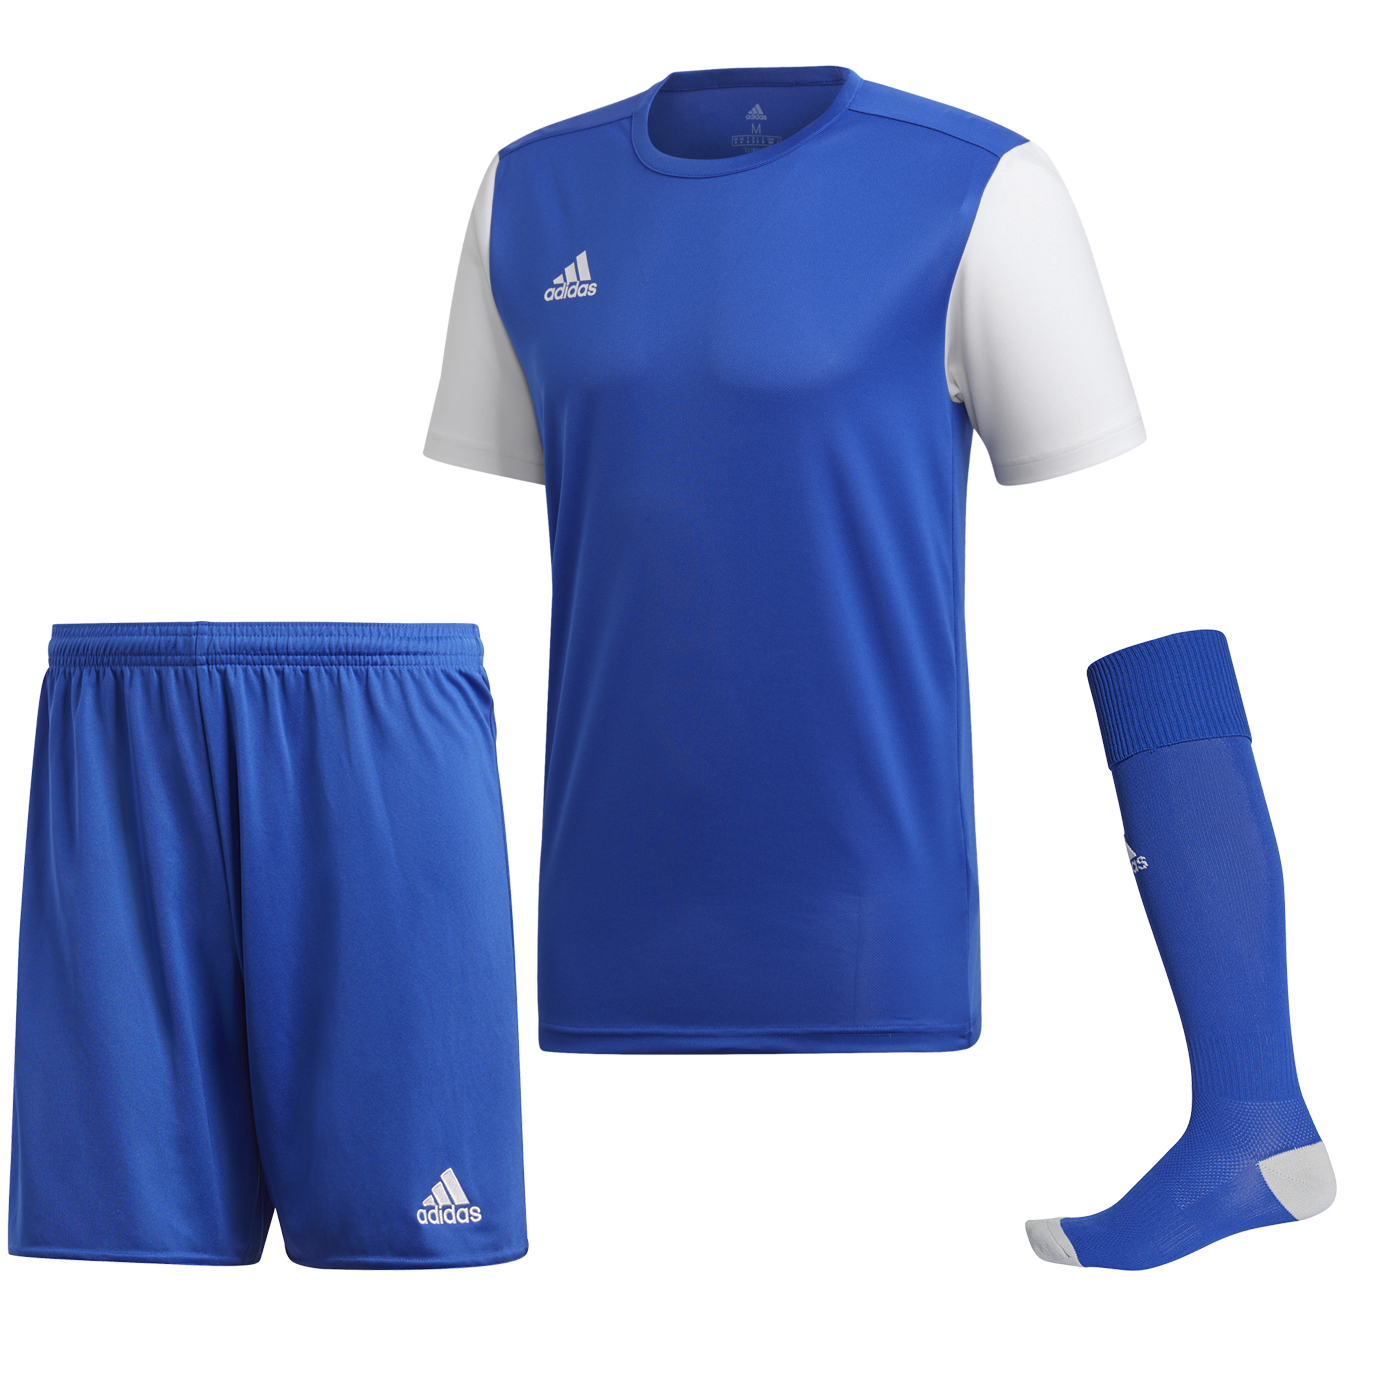 Adidas Estro 19 modrá/bílá UK Junior S Dětské